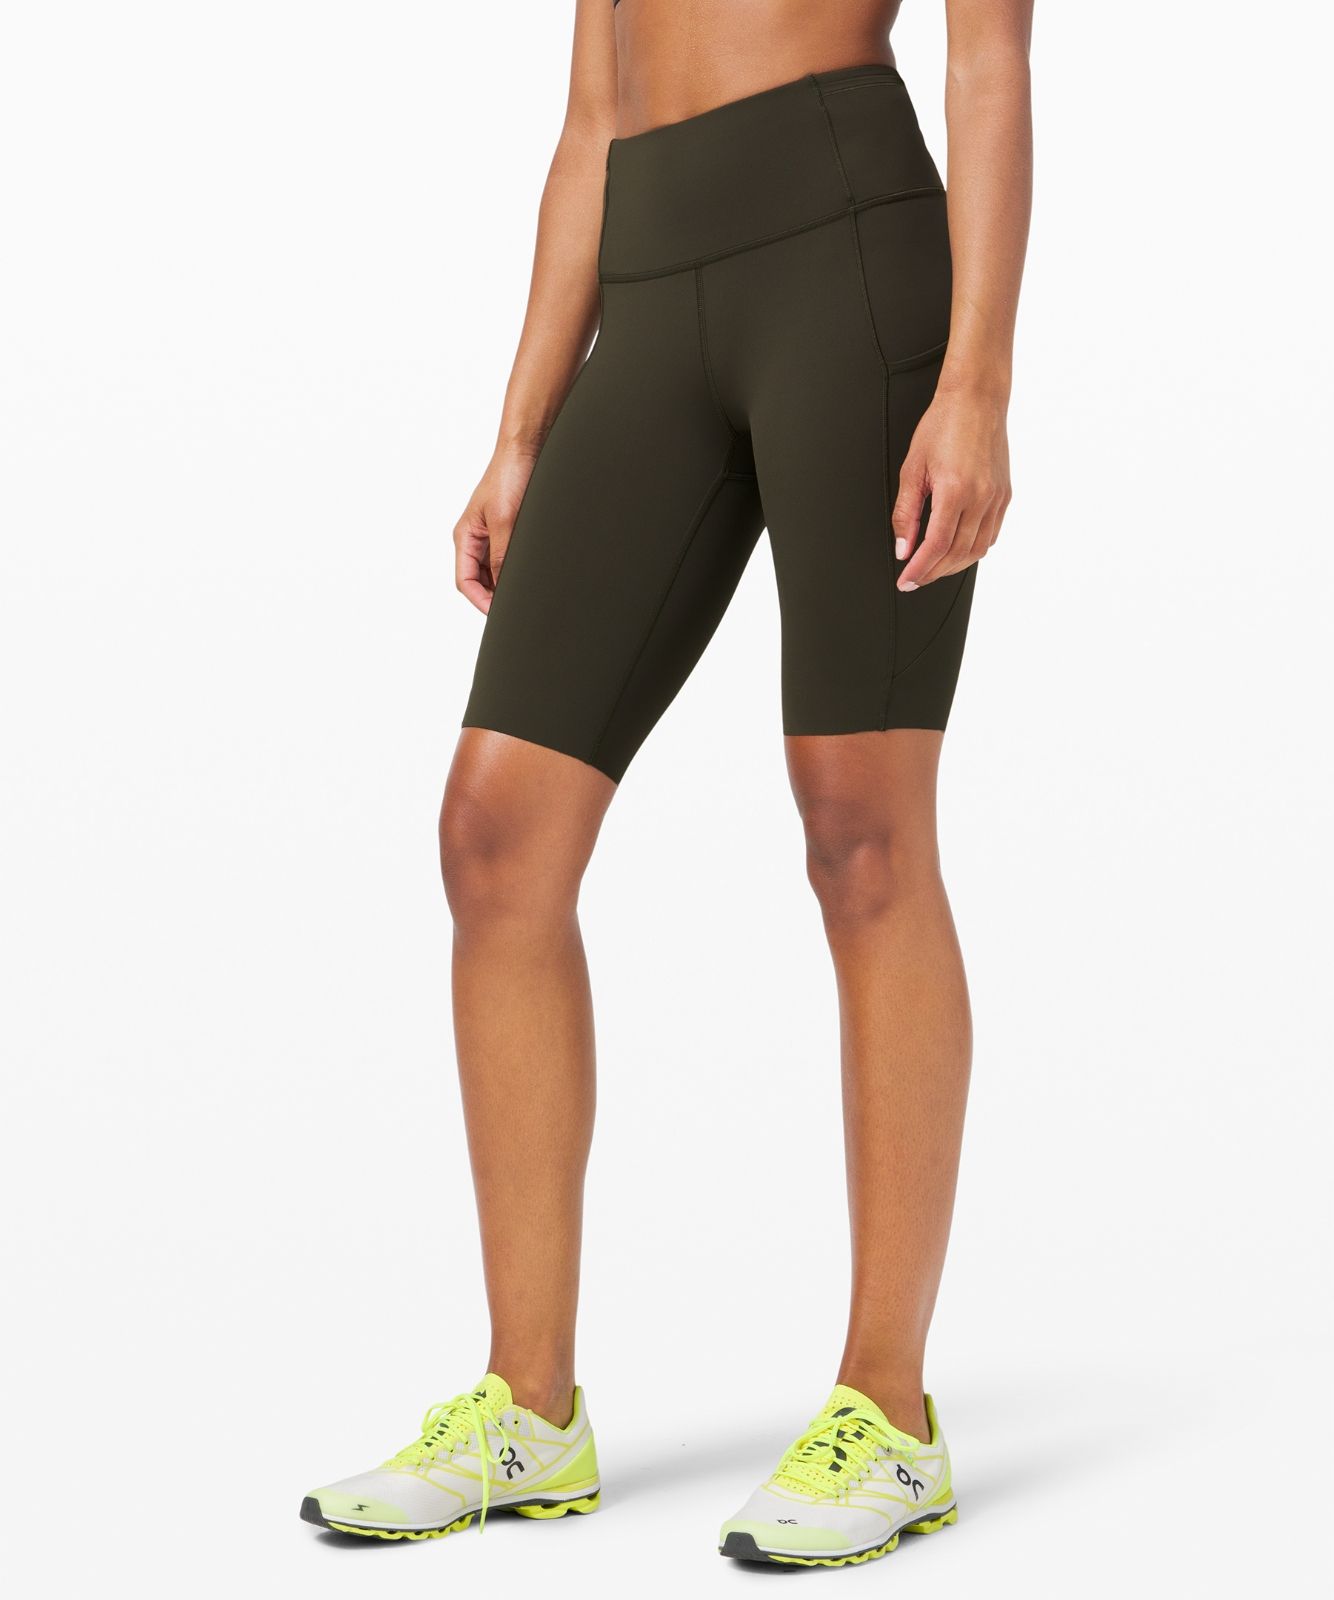 LASD Women/'s High Waisted Biker Shorts Cross Waist Workout Yoga Shorts Ultra Soft Athletic Shorts Running Leggings with//No Pocket